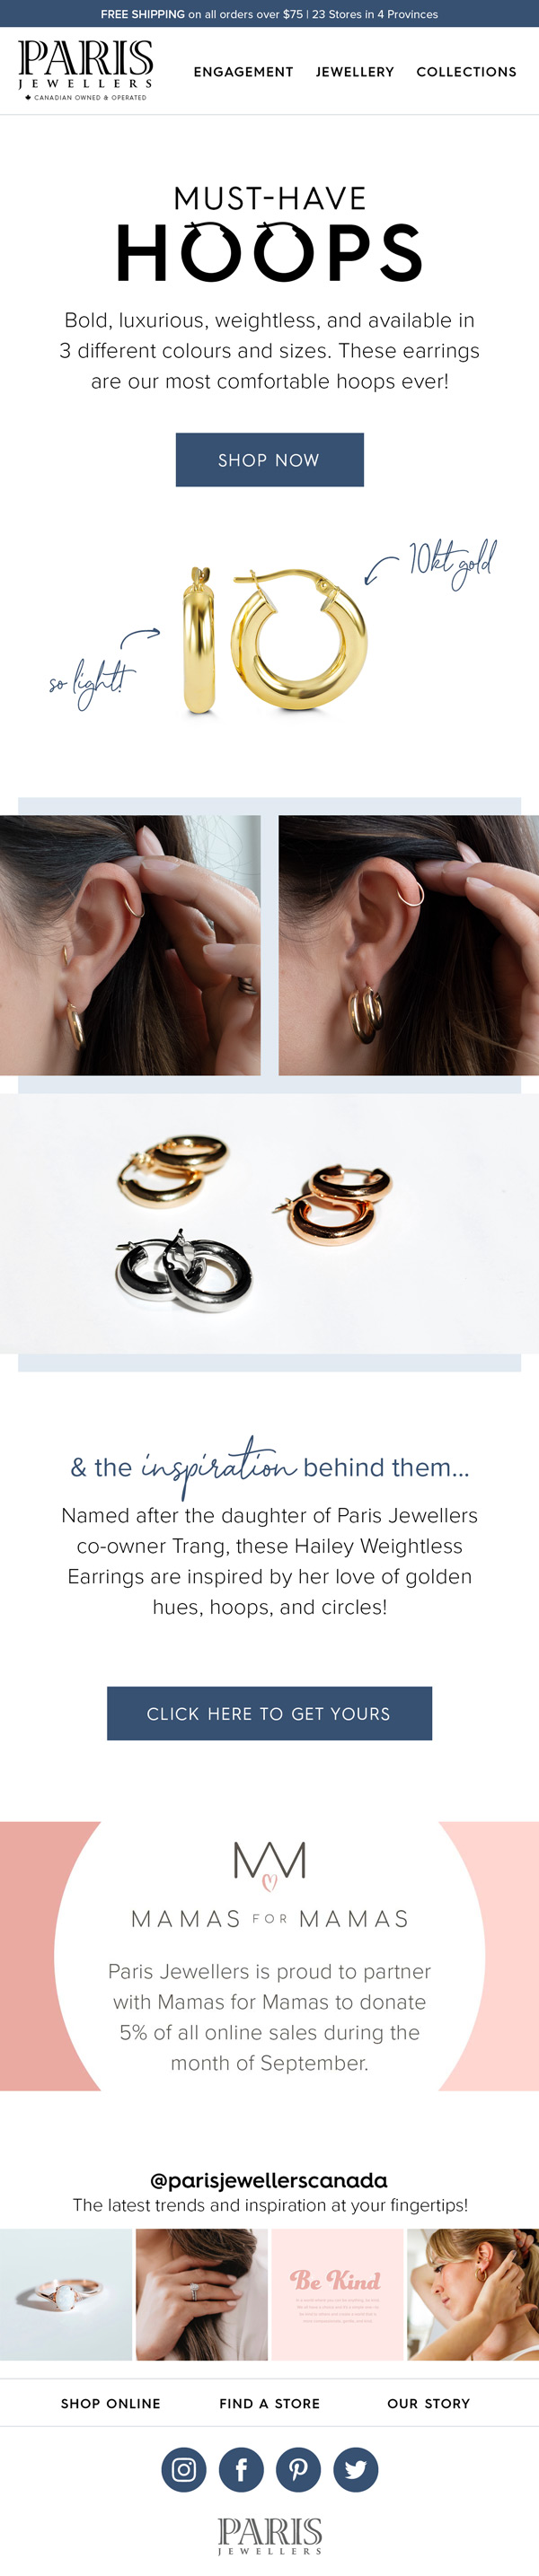 Paris Jewellers Hoops E-newsletter